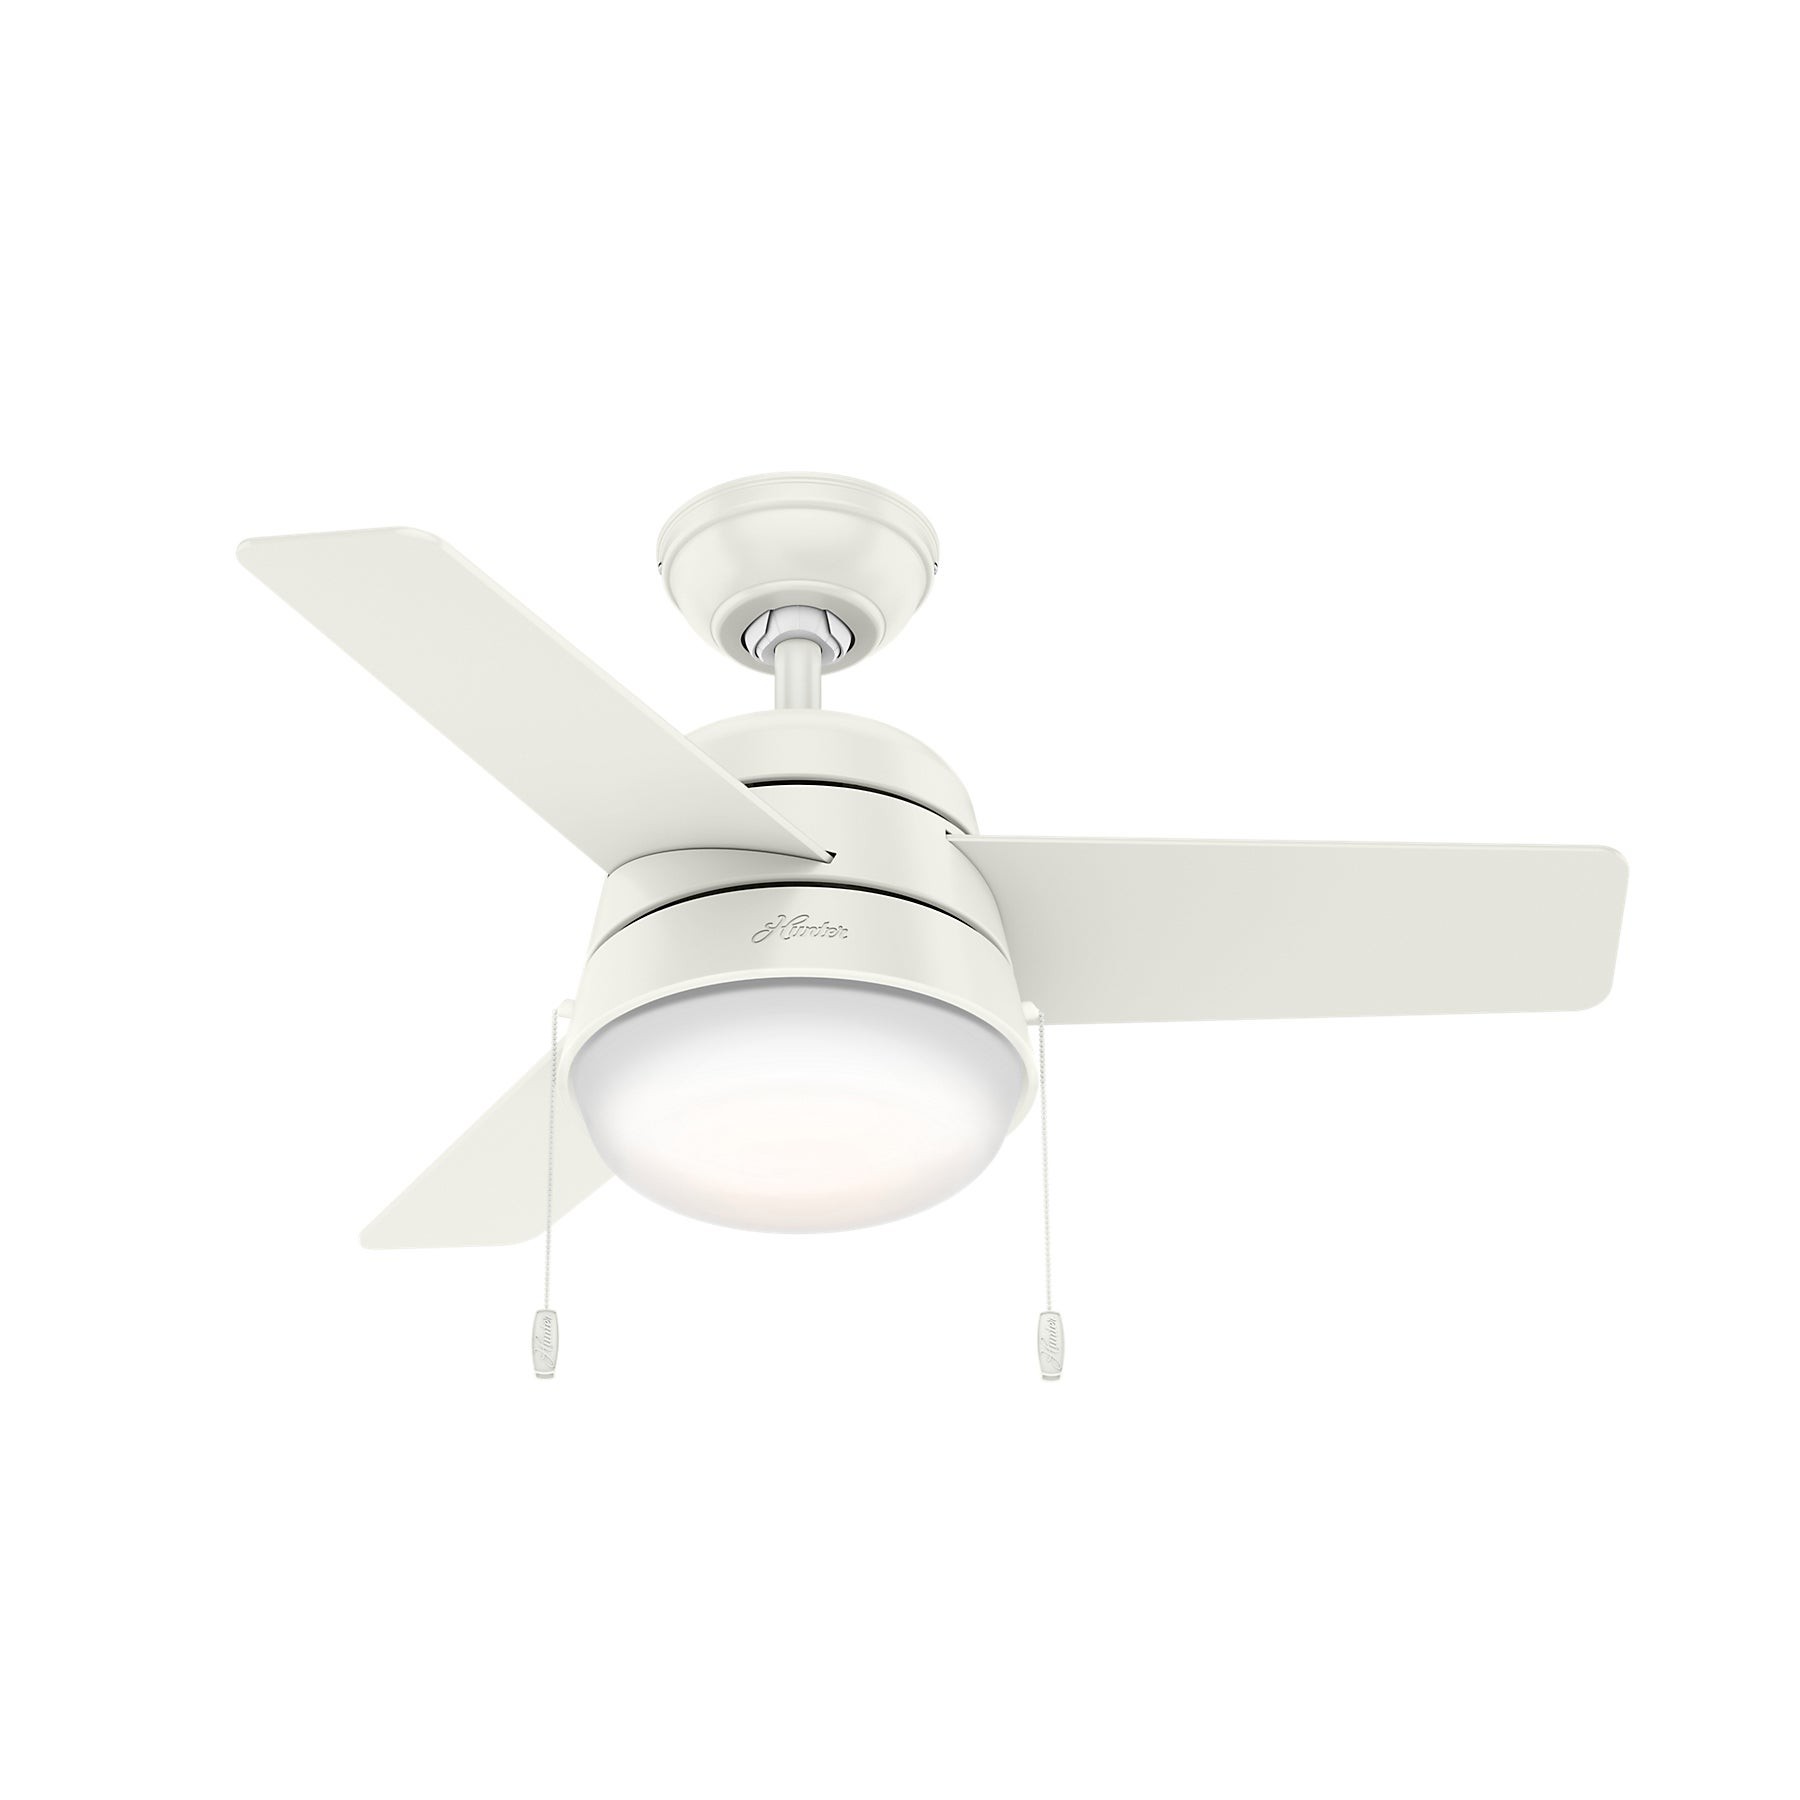 Aker 36" Ceiling Fan w/ Light Kit White